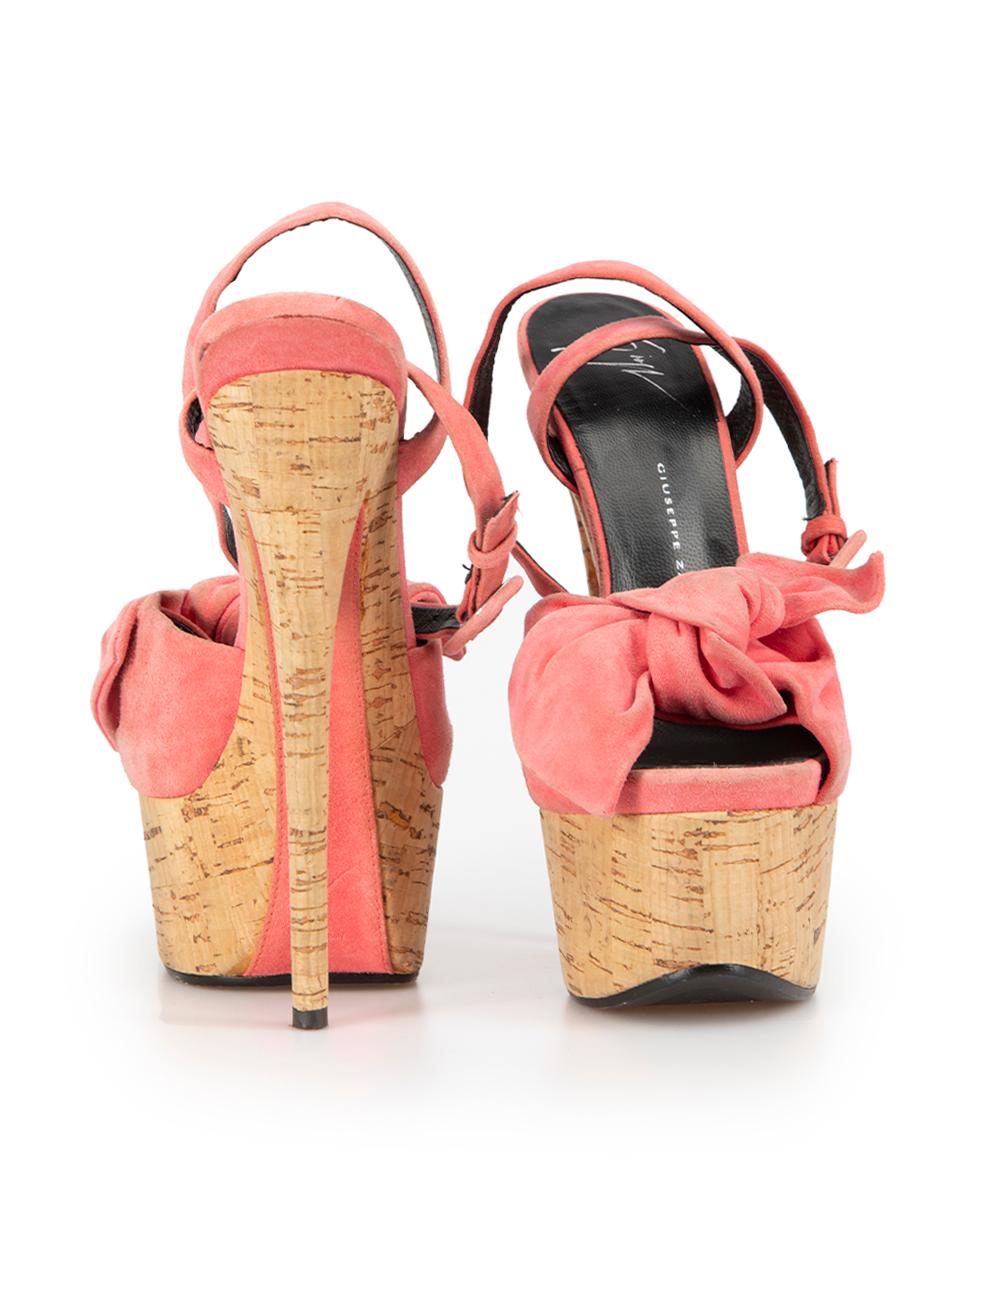 Giuseppe Zanotti Women's Pink Suede Cork Platform Heel Sandals In Good Condition For Sale In London, GB